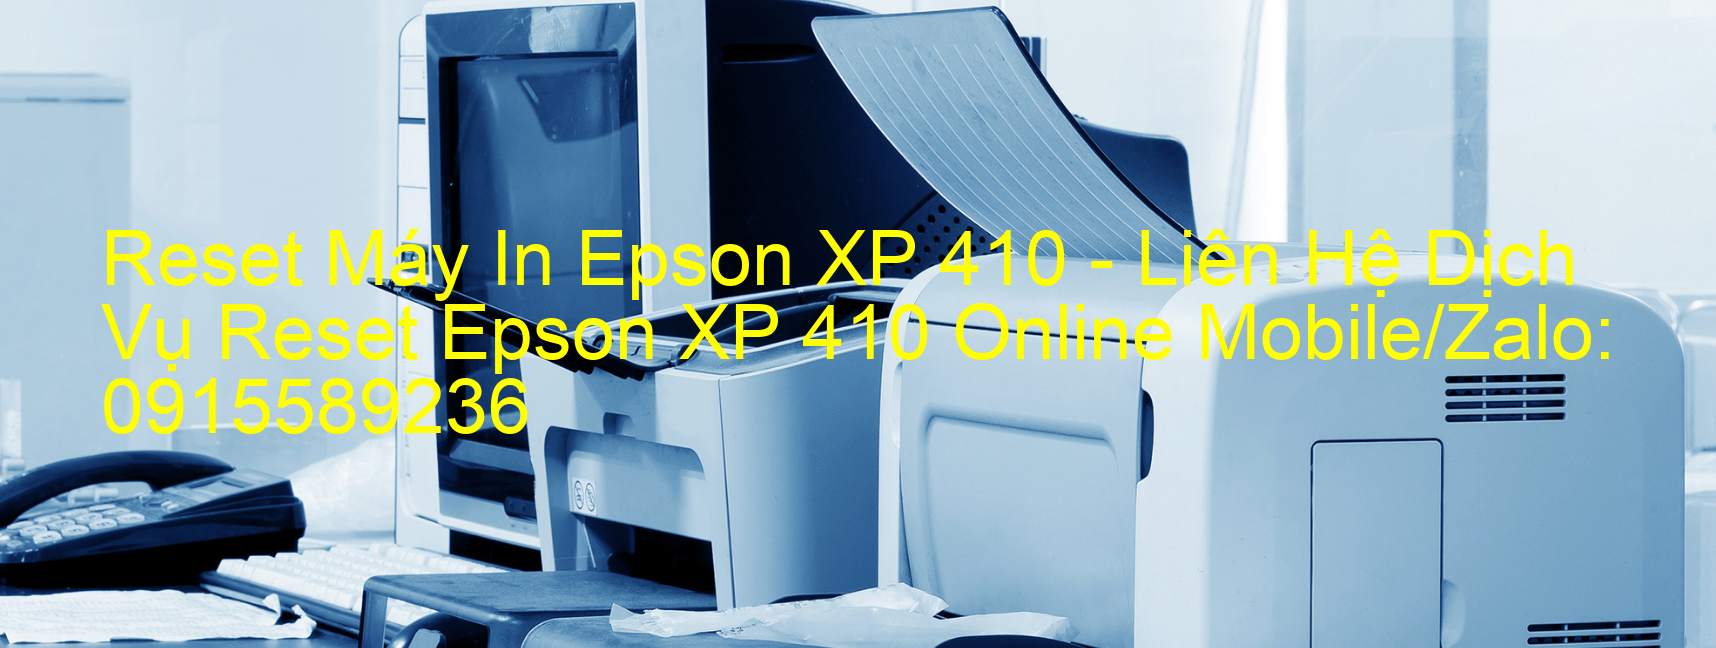 Reset Máy In Epson XP 410 Online